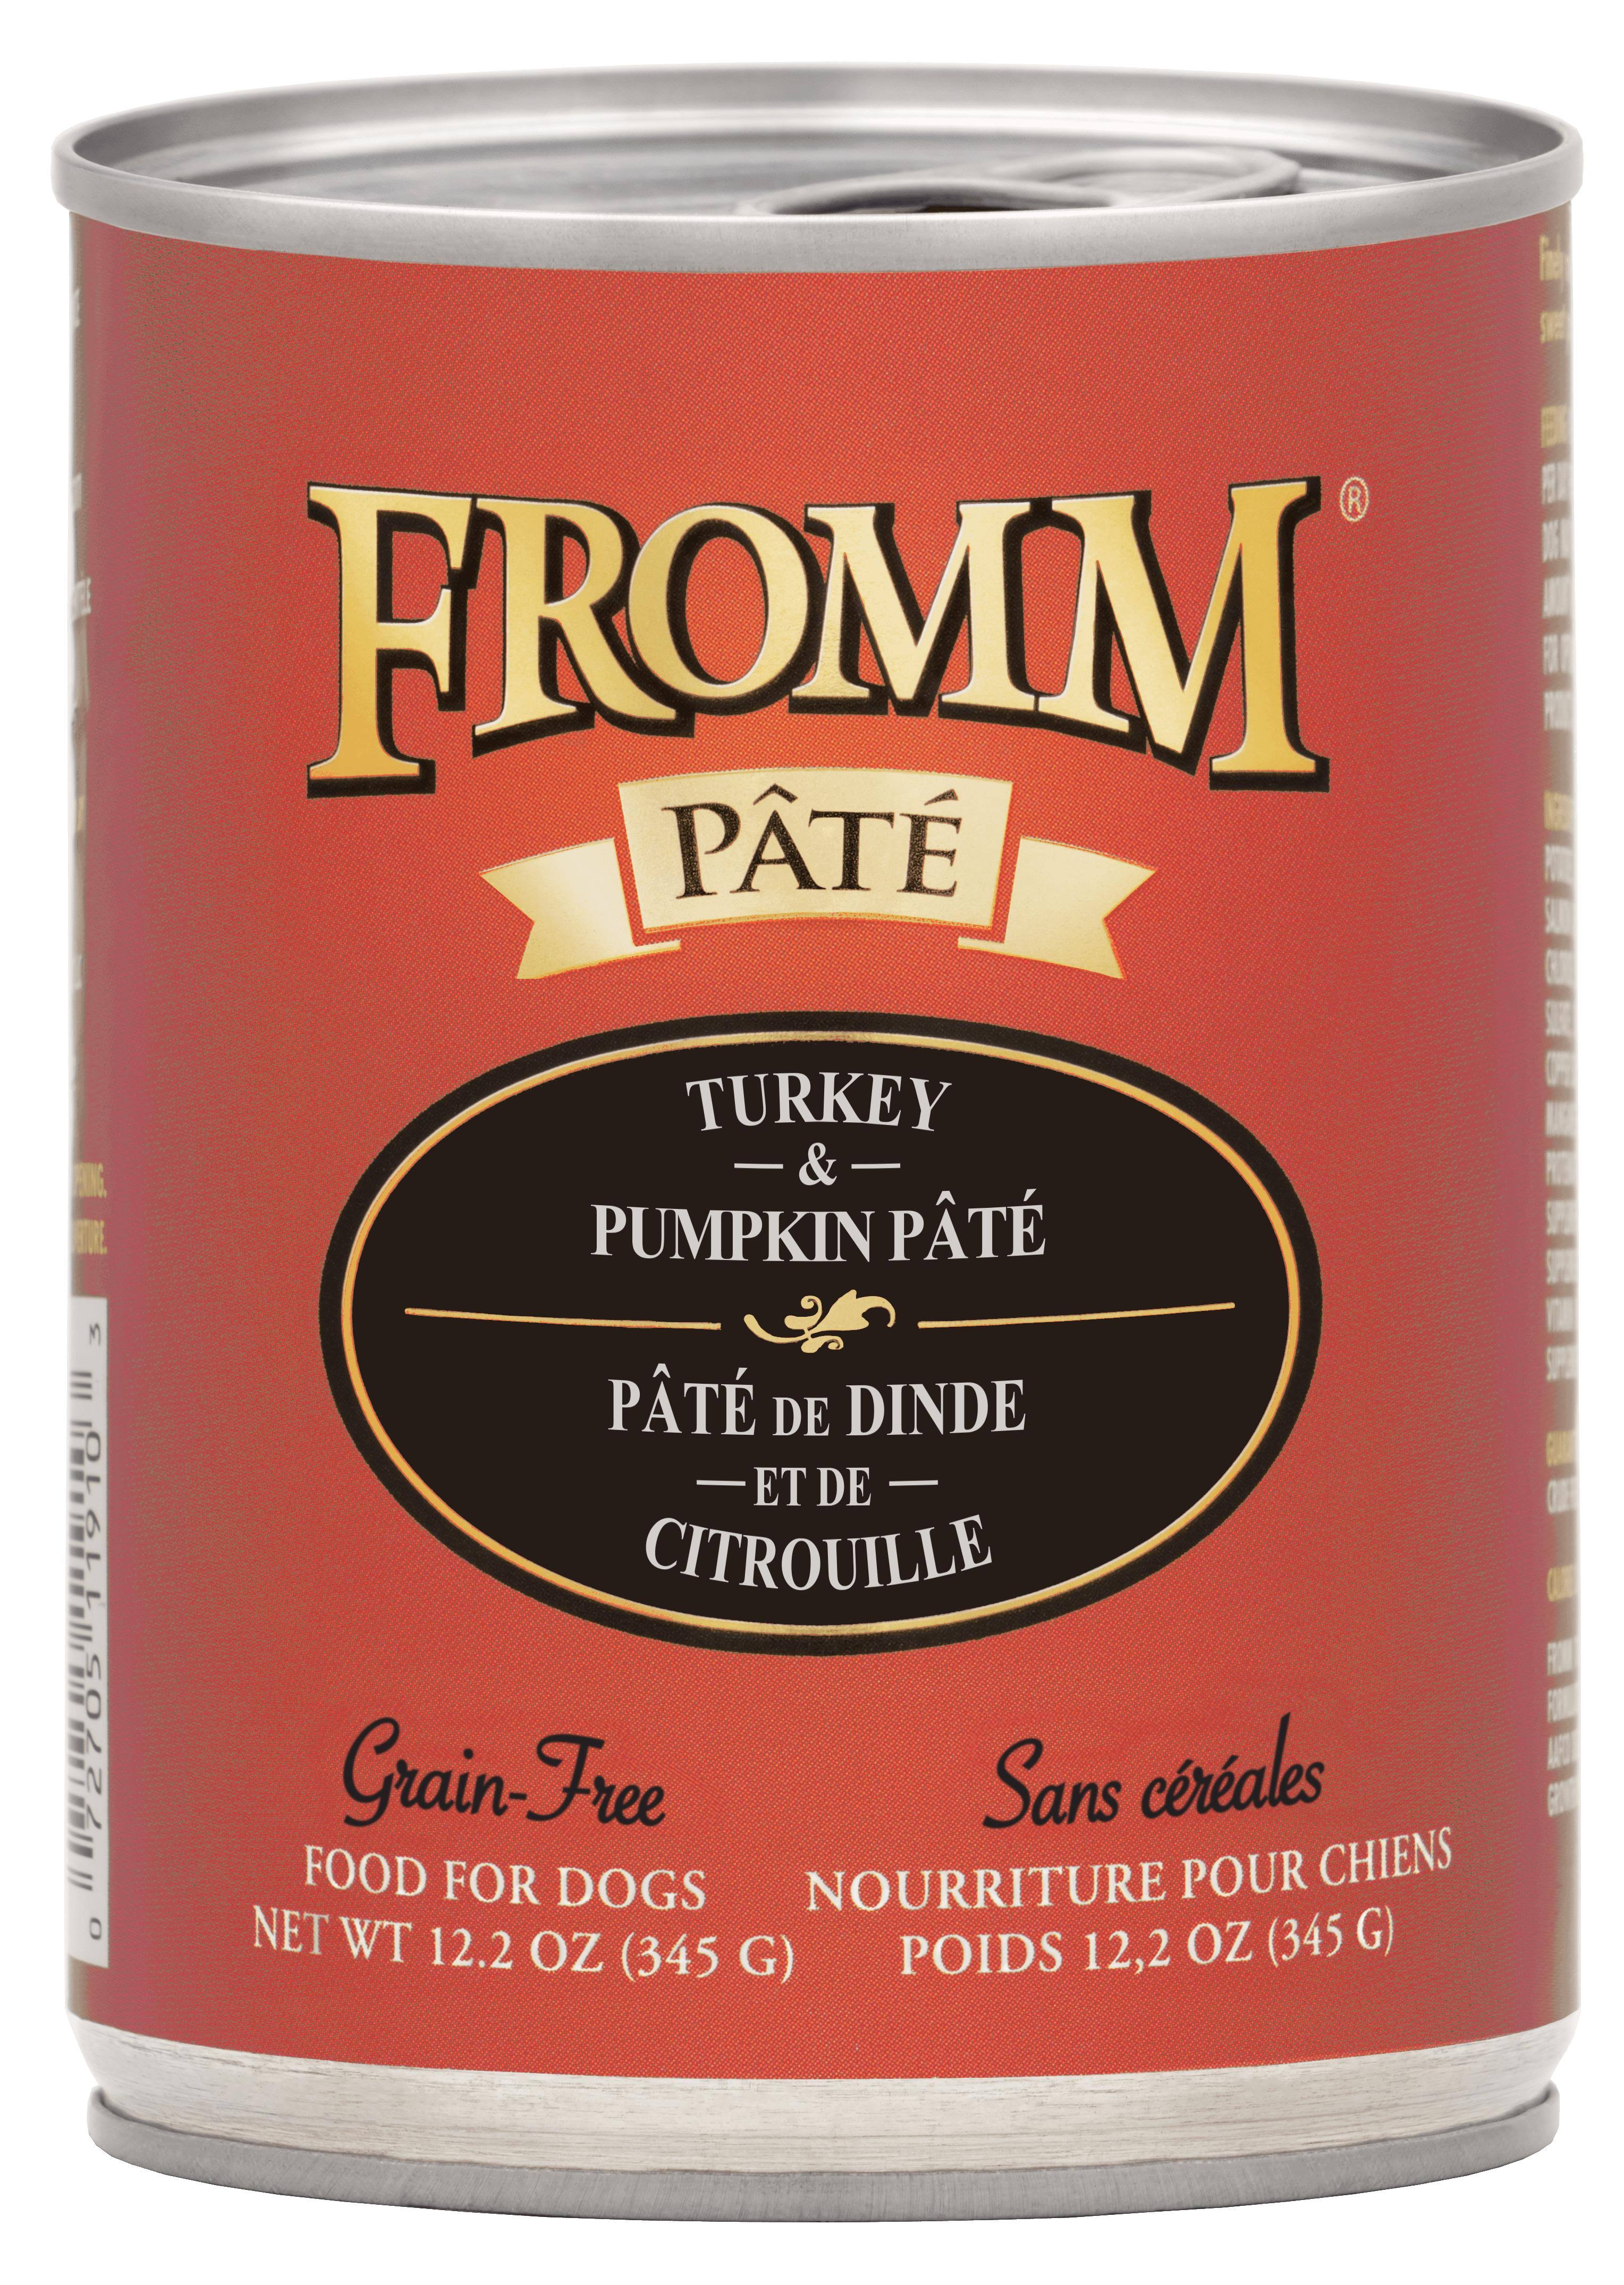 Fromm Turkey & Pumpkin Pate Canned Dog Food, 12.2-oz